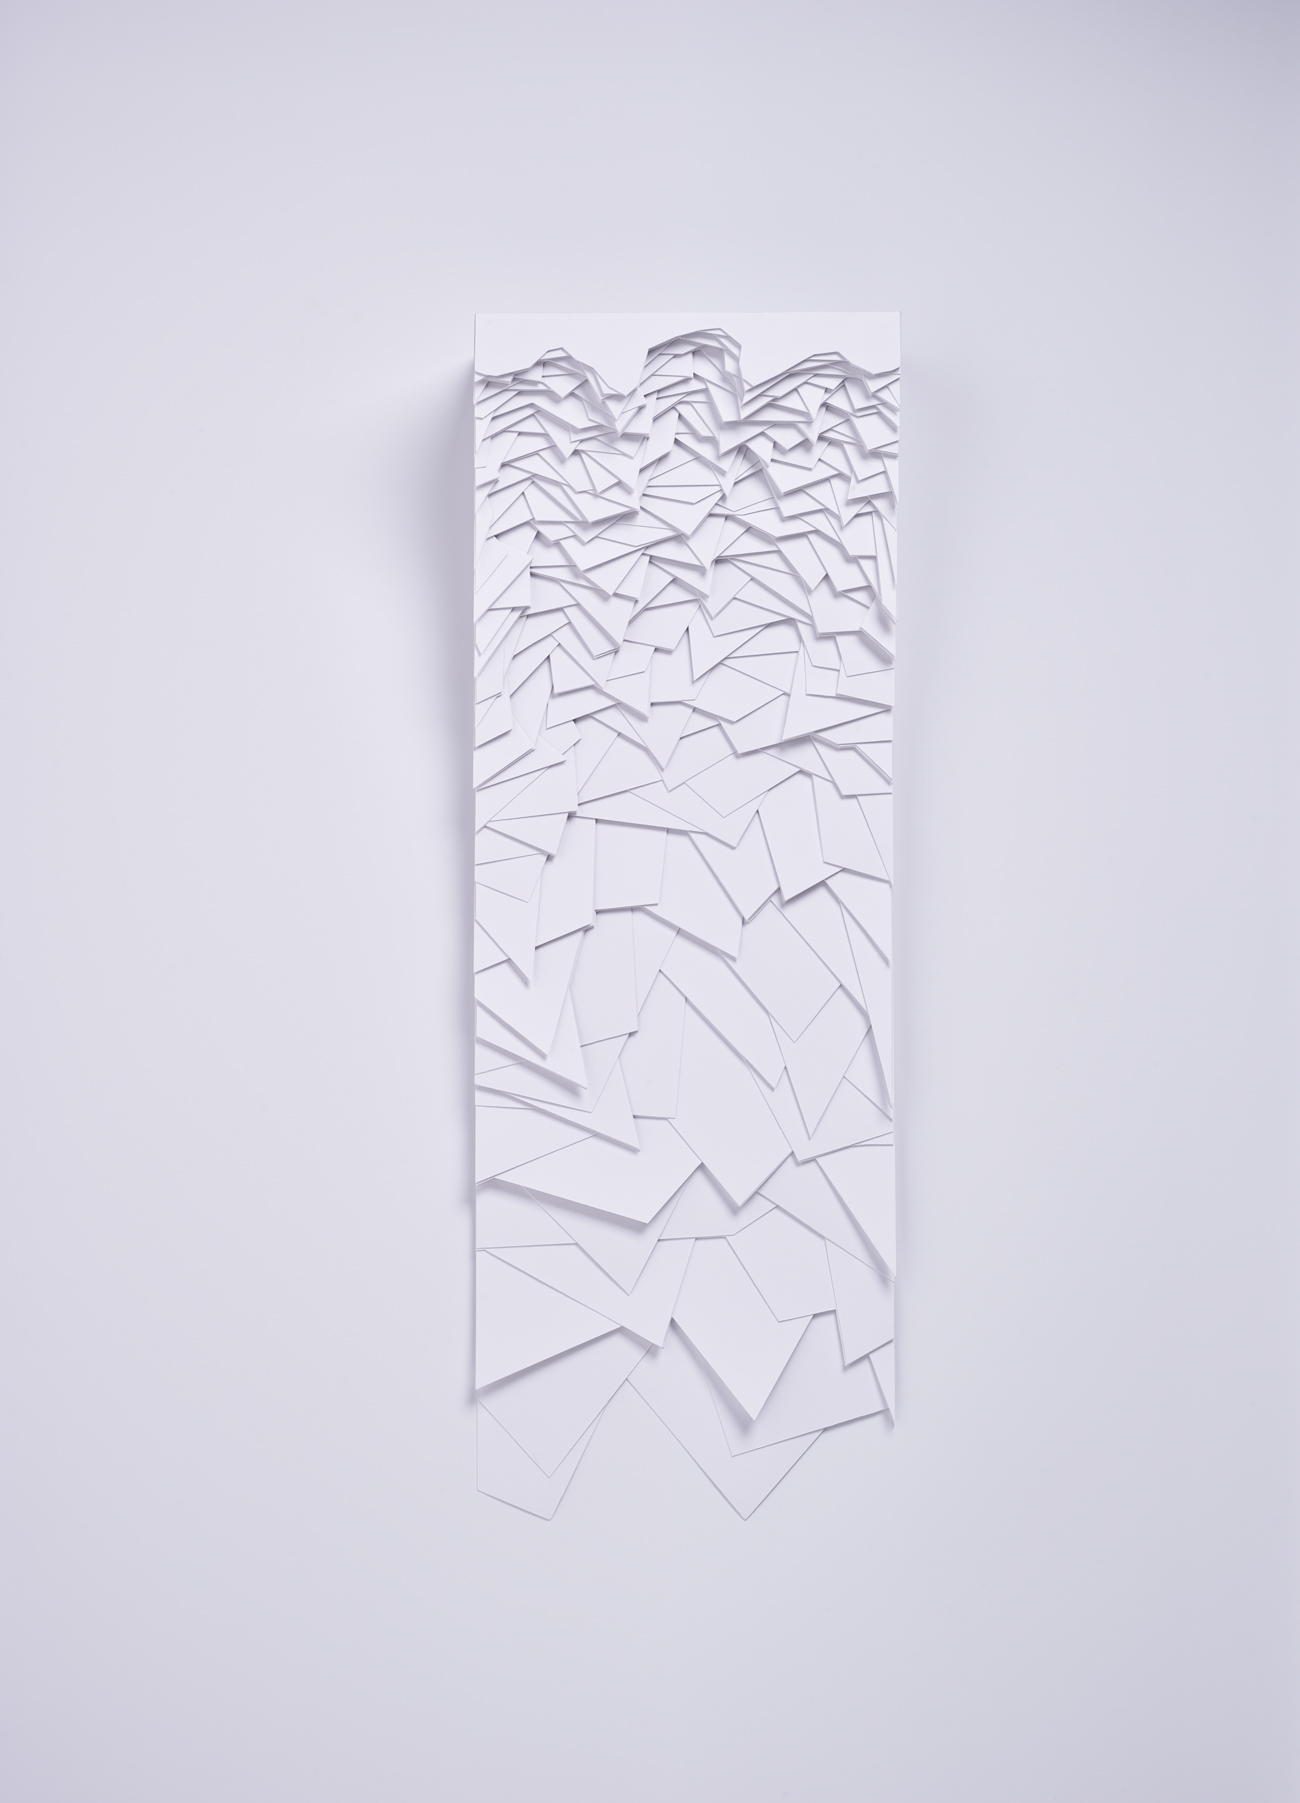 studio Maud Vantours paper art paper sculpture paper design Diamond Paris